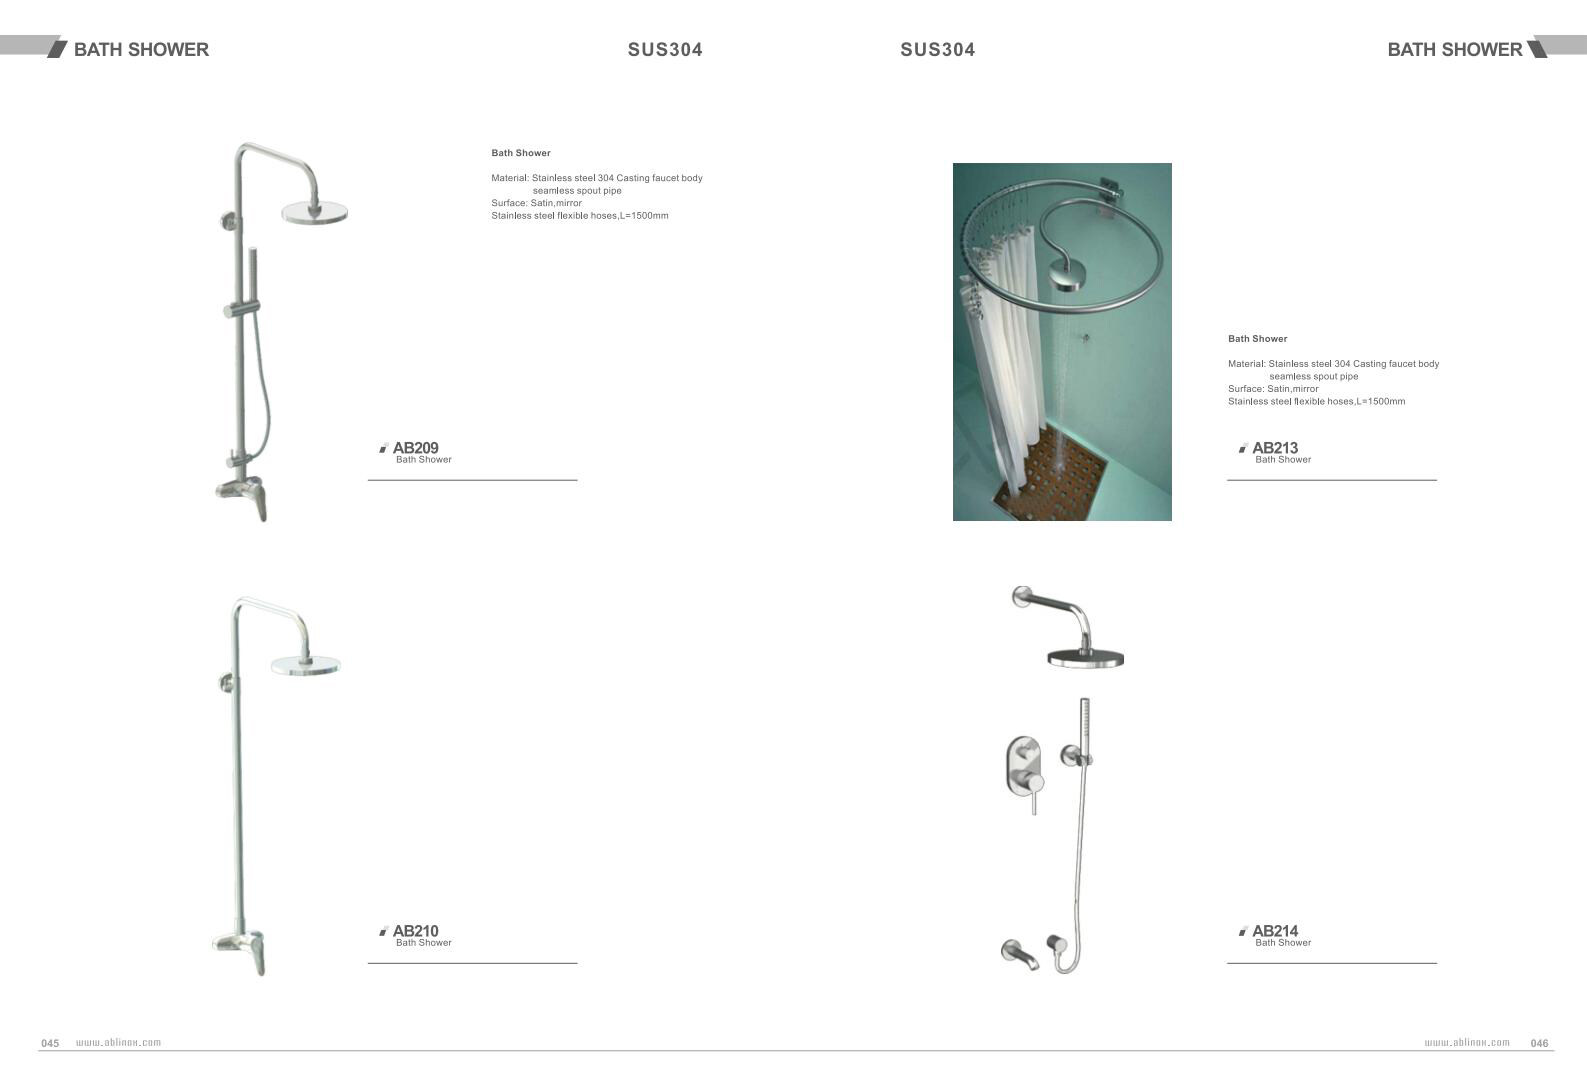 Luxury Bath Shower Mixer And Shower Faucet Set,Wall Mounted Mixer Shower Head,Complete Bathroom Rain Shower Set